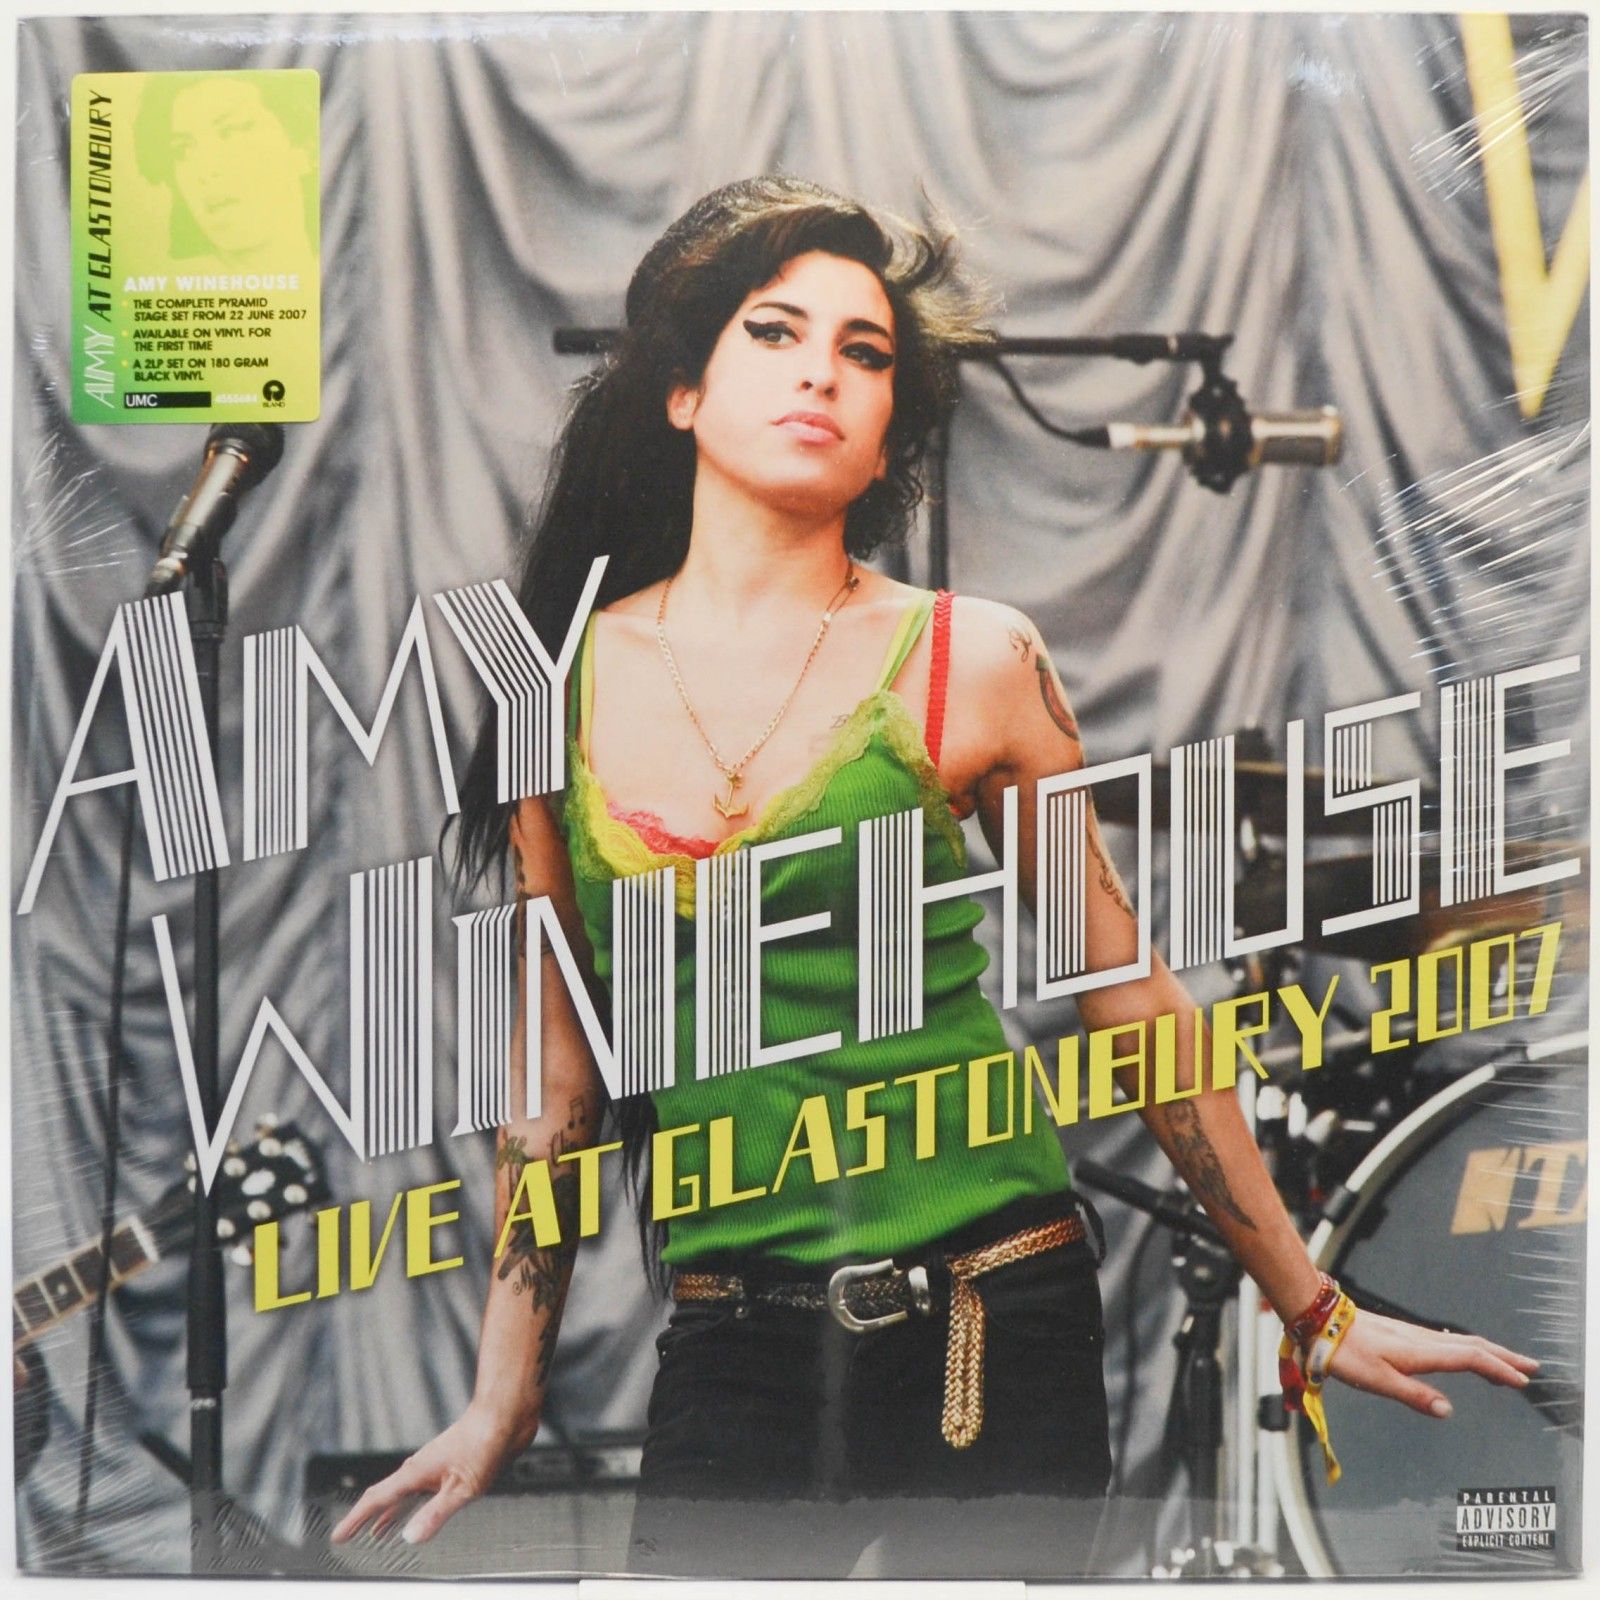 Amy Winehouse — Live At Glastonbury 2007 (2LP), 2007